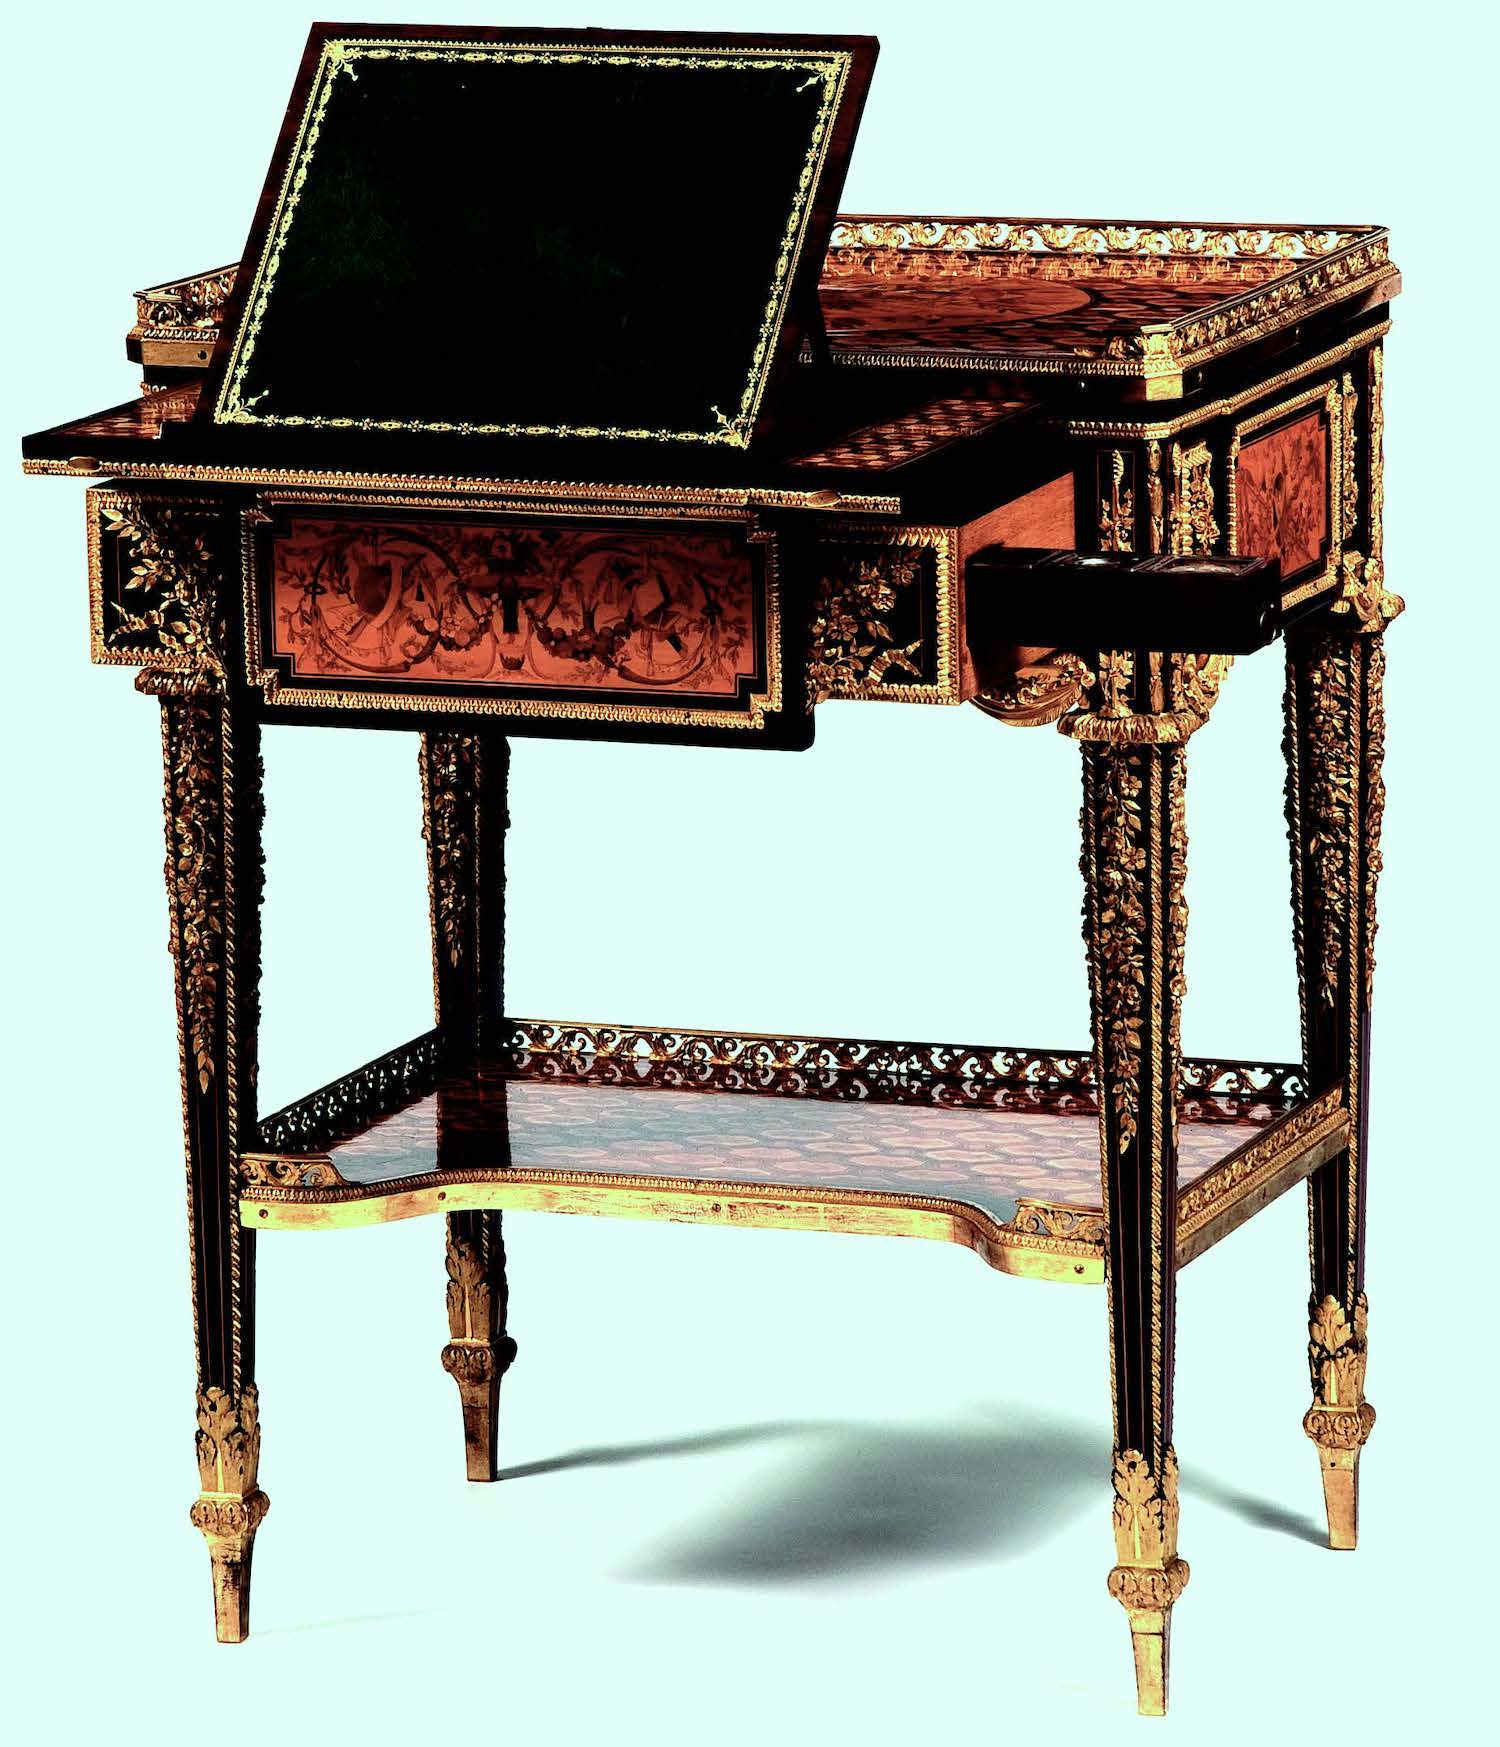 An original table made by the Parisian ébéniste Jean-Henri Riesener (1734-1806) for Marie-Antoinette in c. 1781